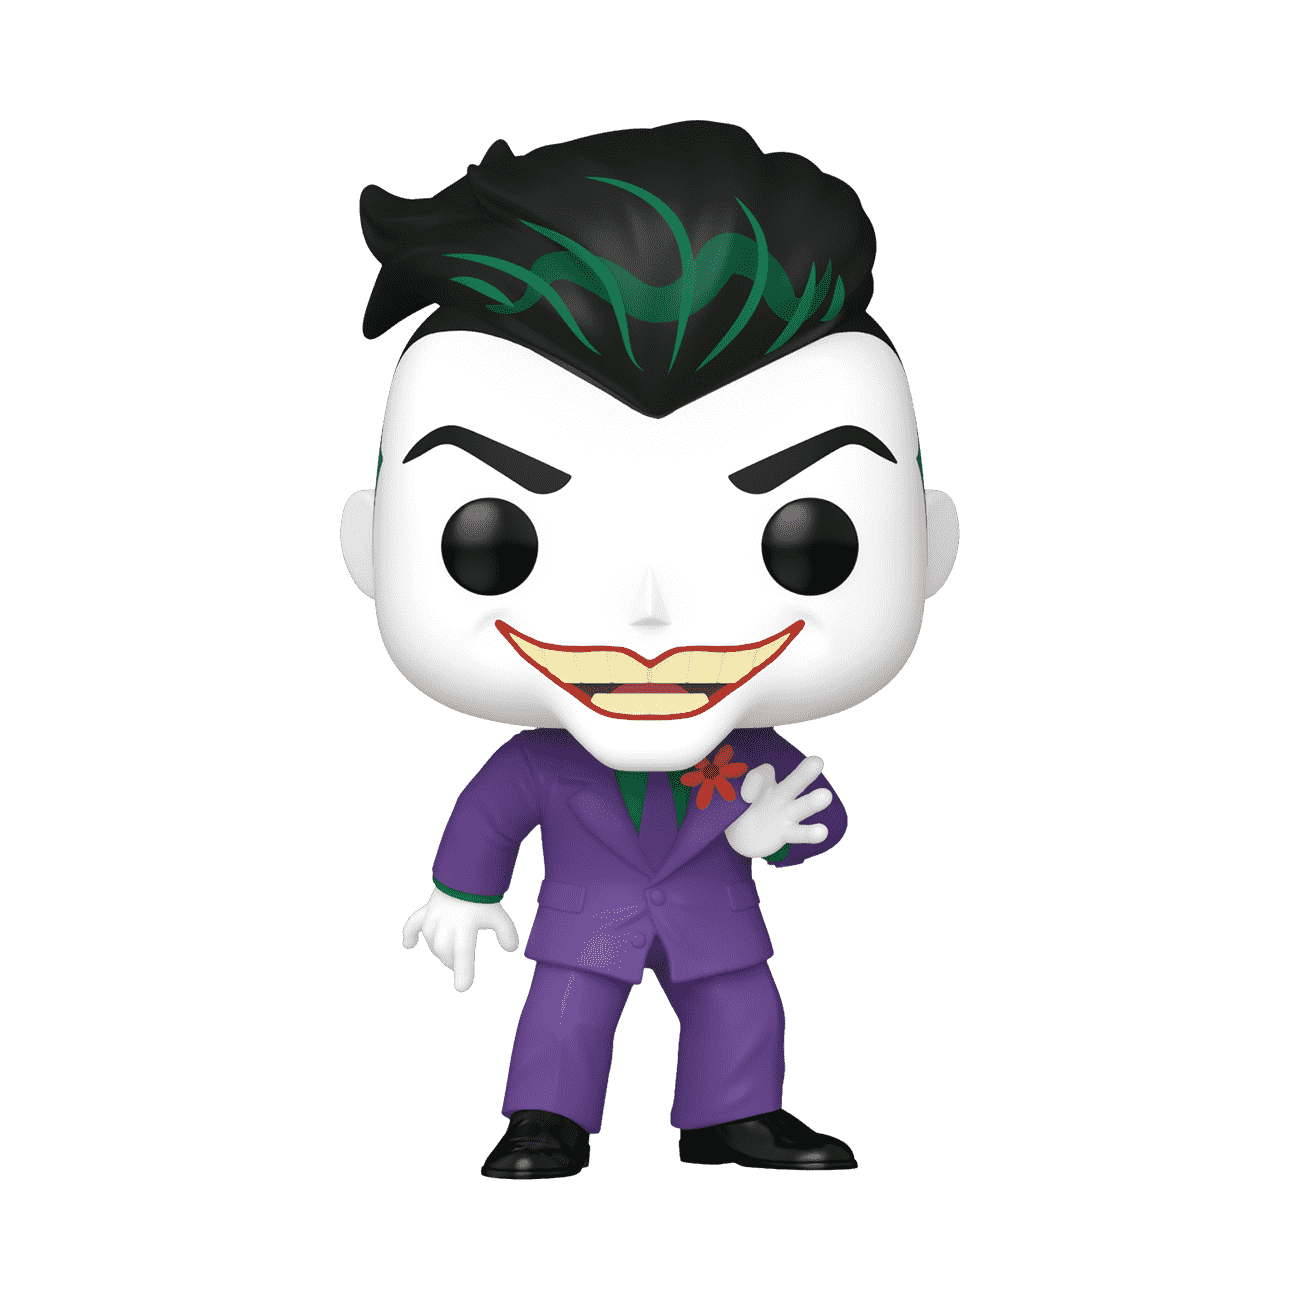 Buy Pop! The Joker Holding Lapel at Funko.